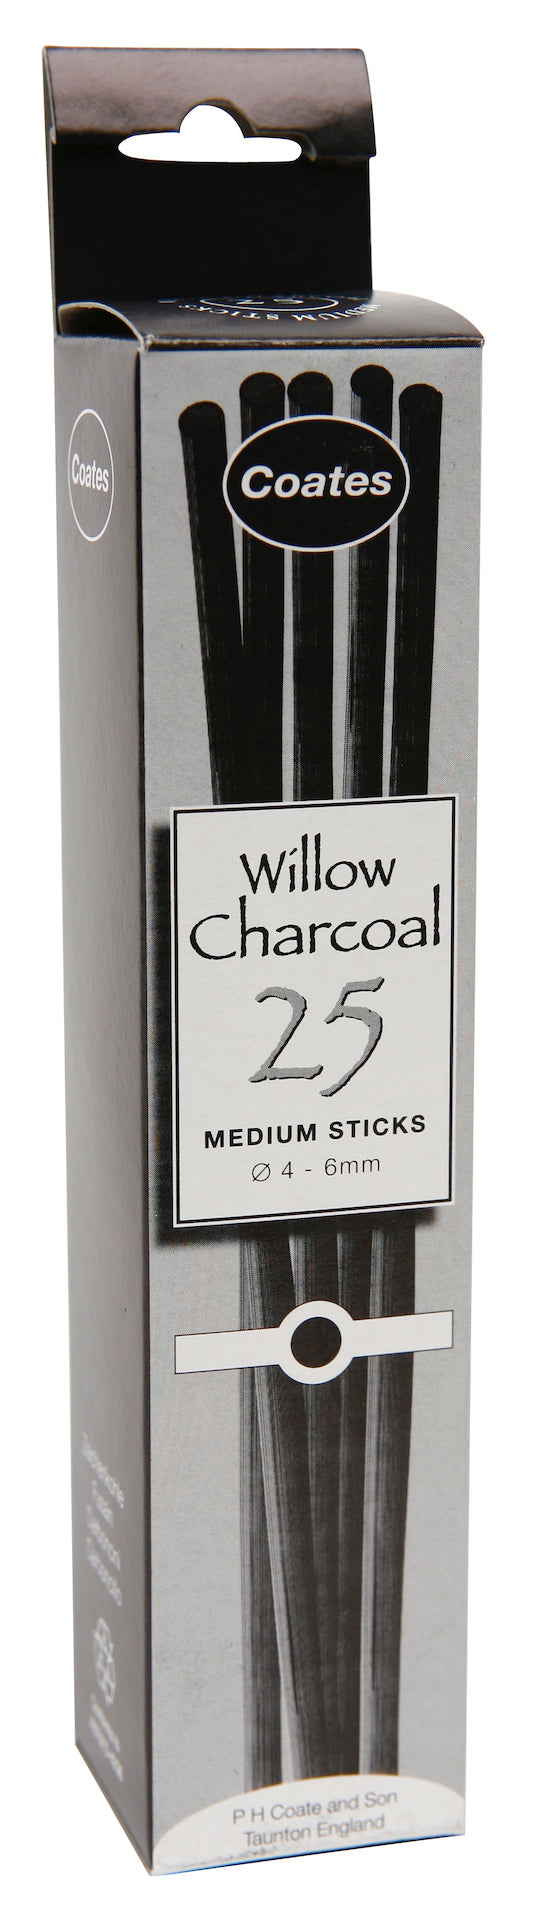 Coates Willow Medium Charcoal Sticks 5 6mm Pack Of 25 Sticks